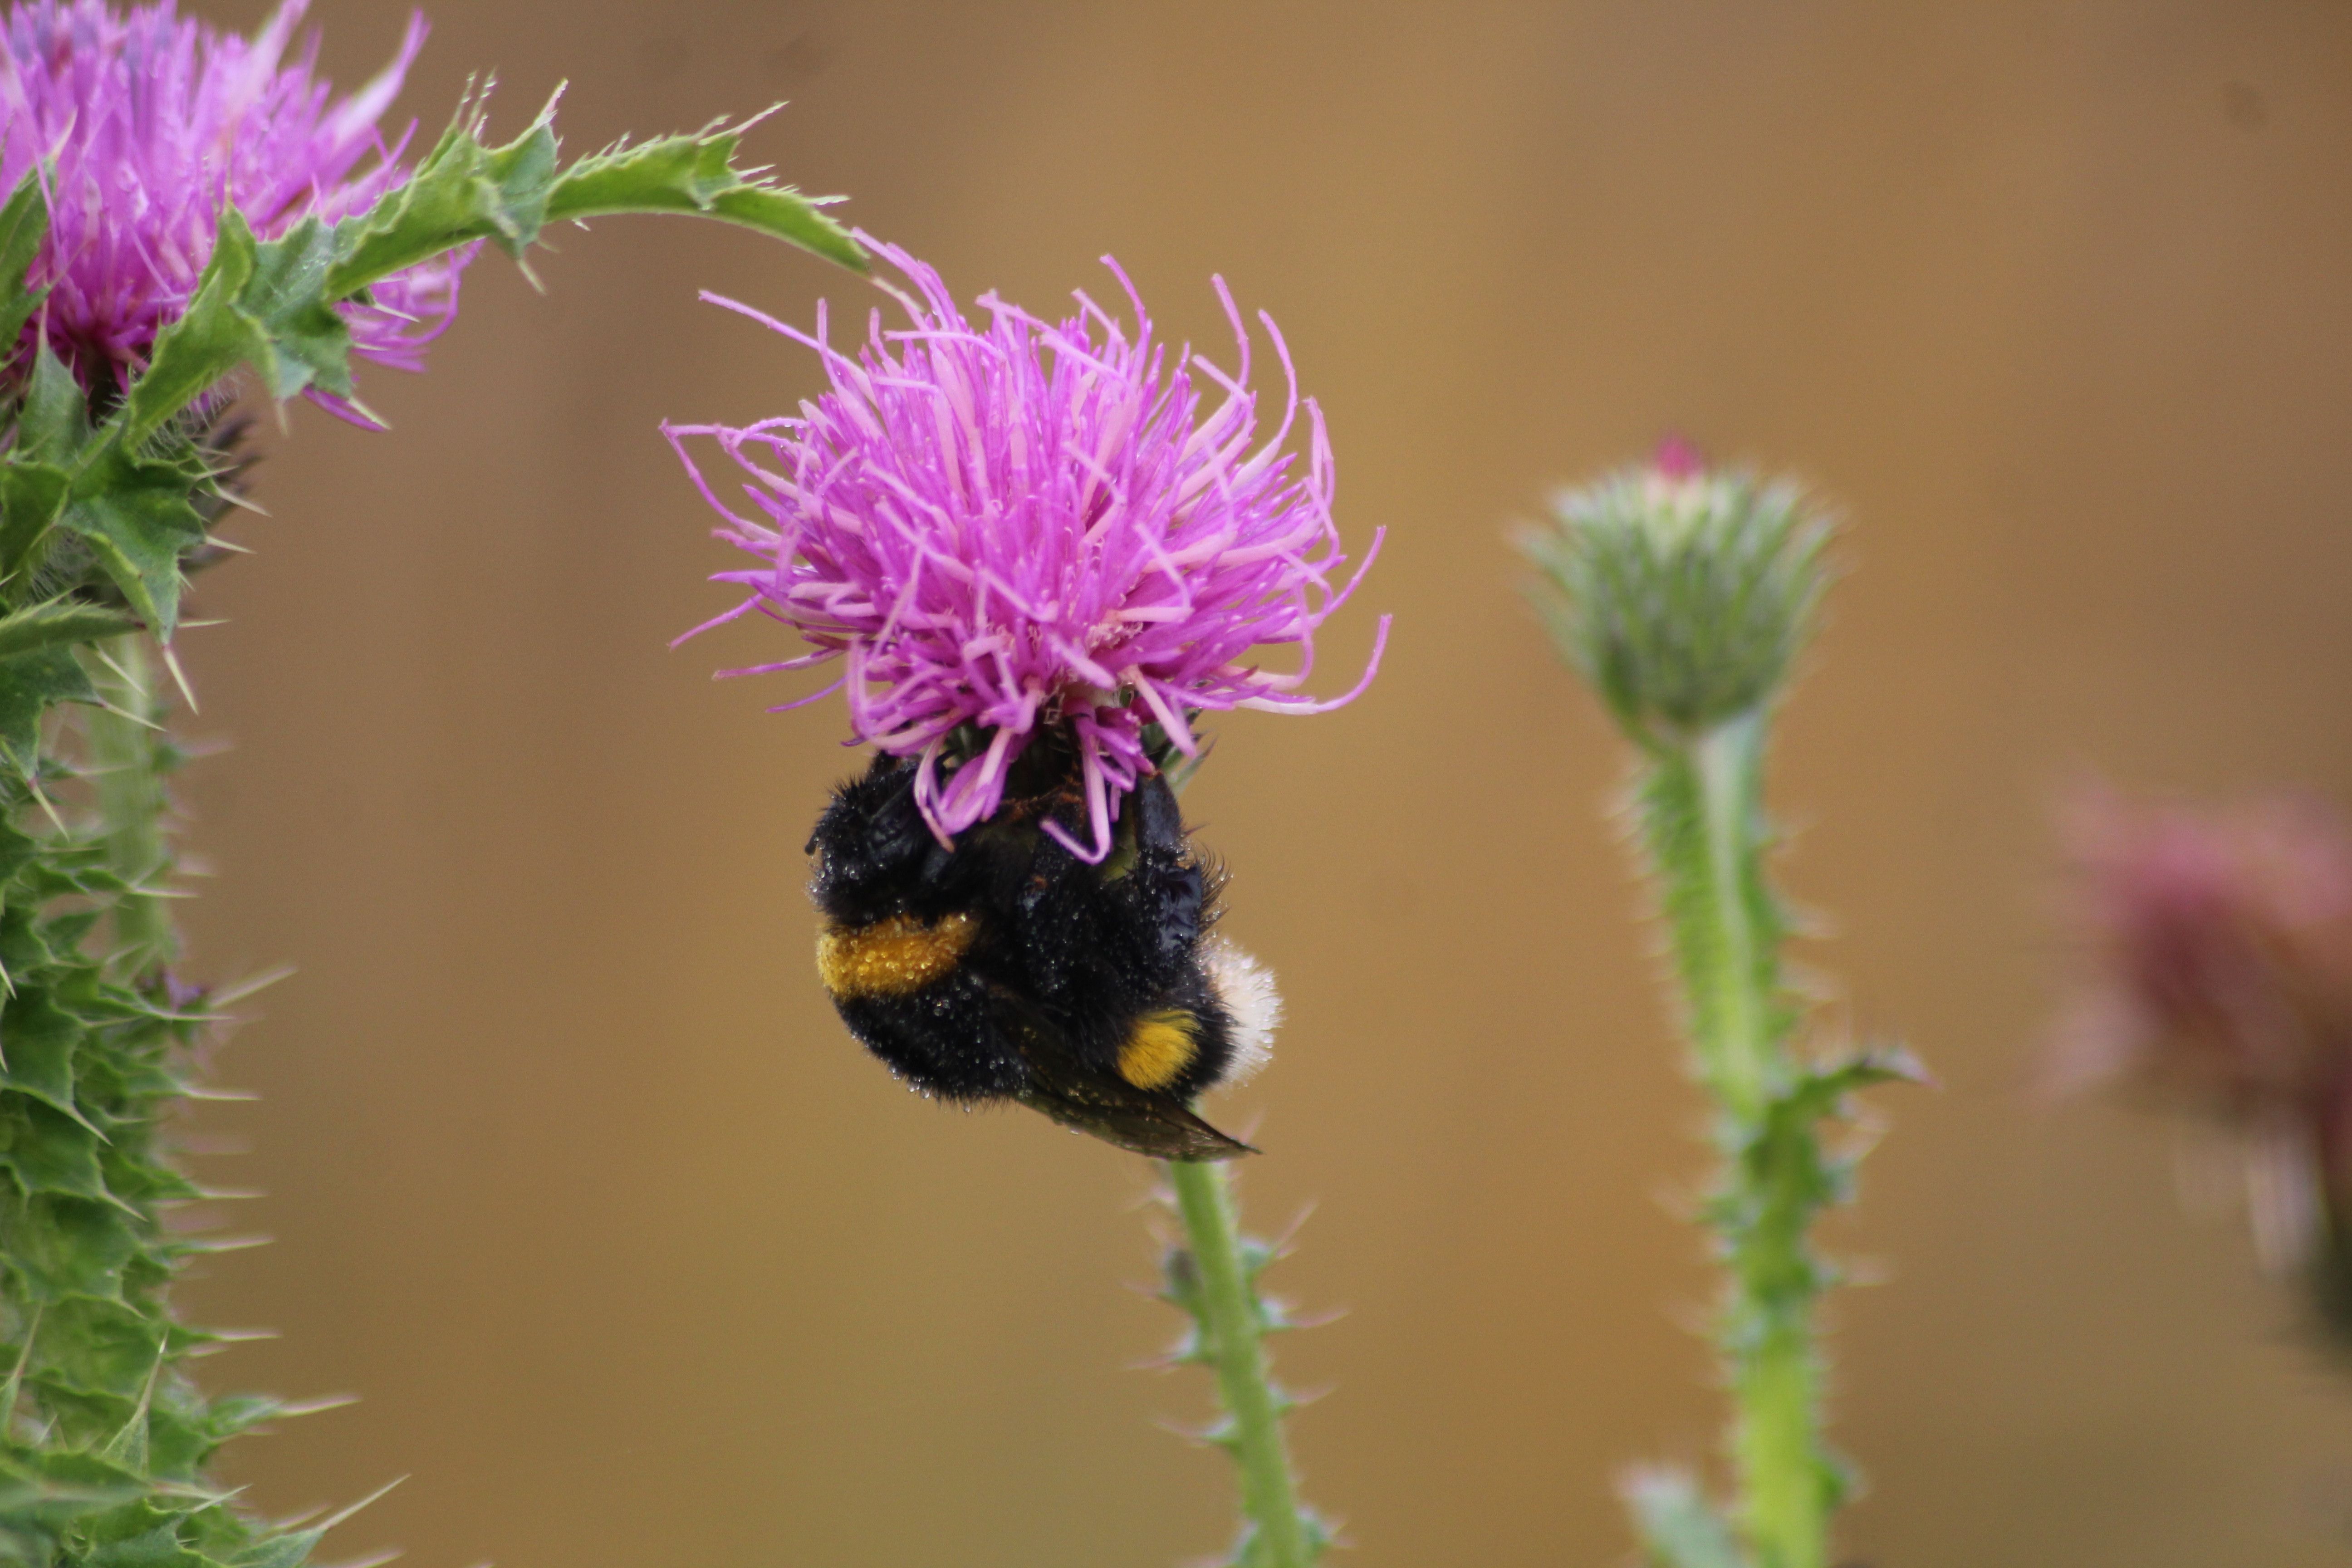 File:Frozen buff-tailed bumblebee.jpg - Wikimedia Commons